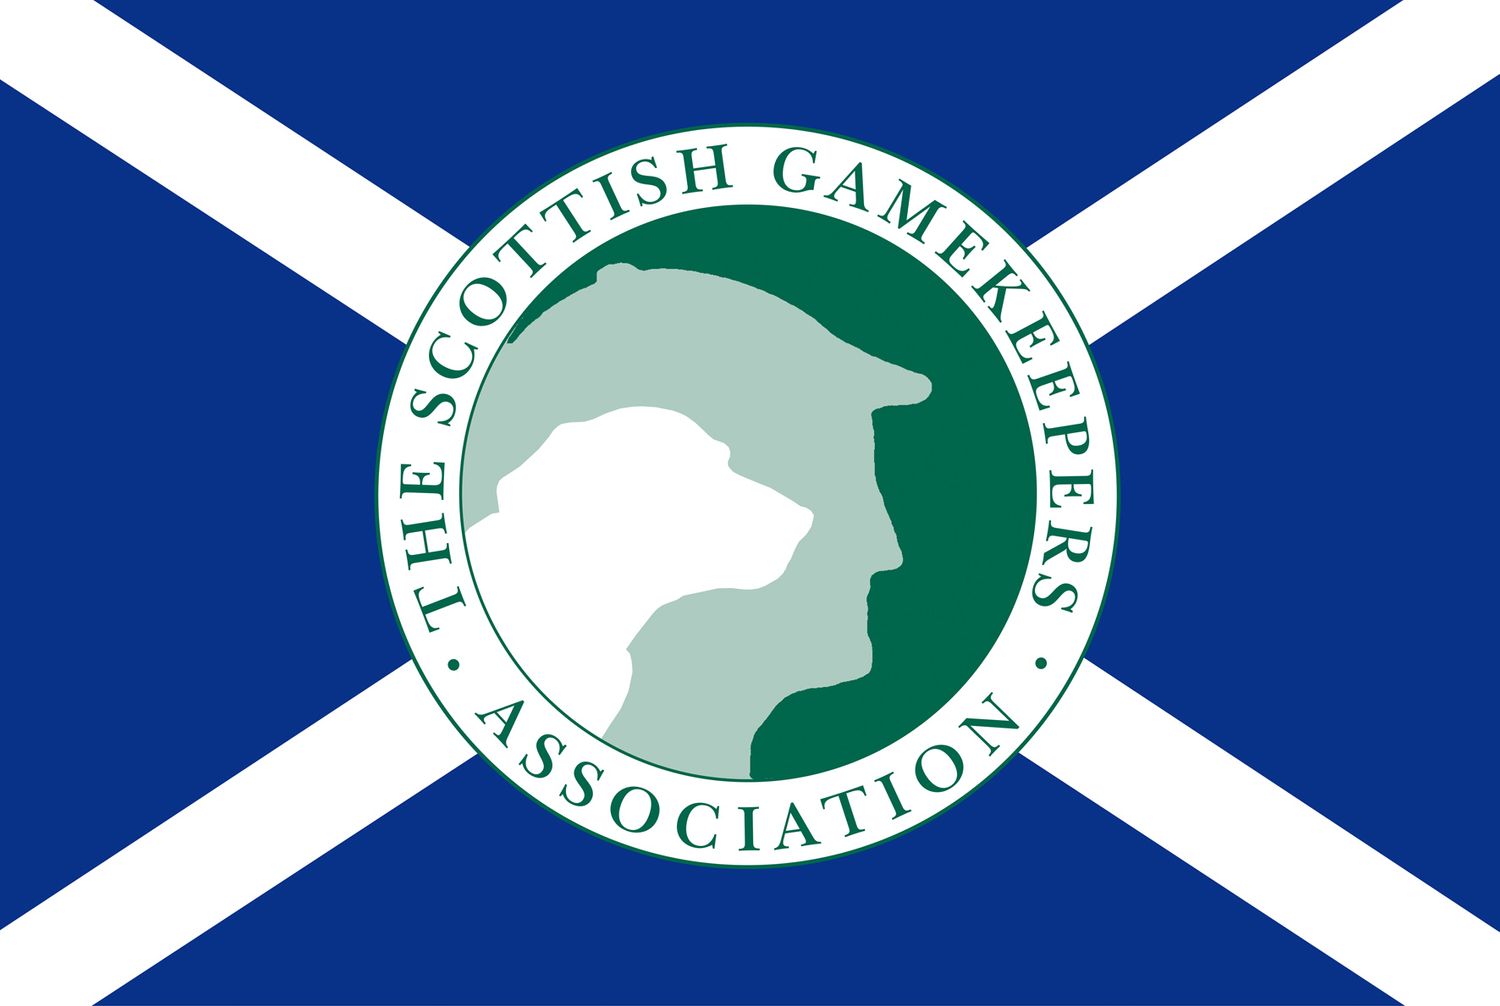 Scottish Gamekeepers Association